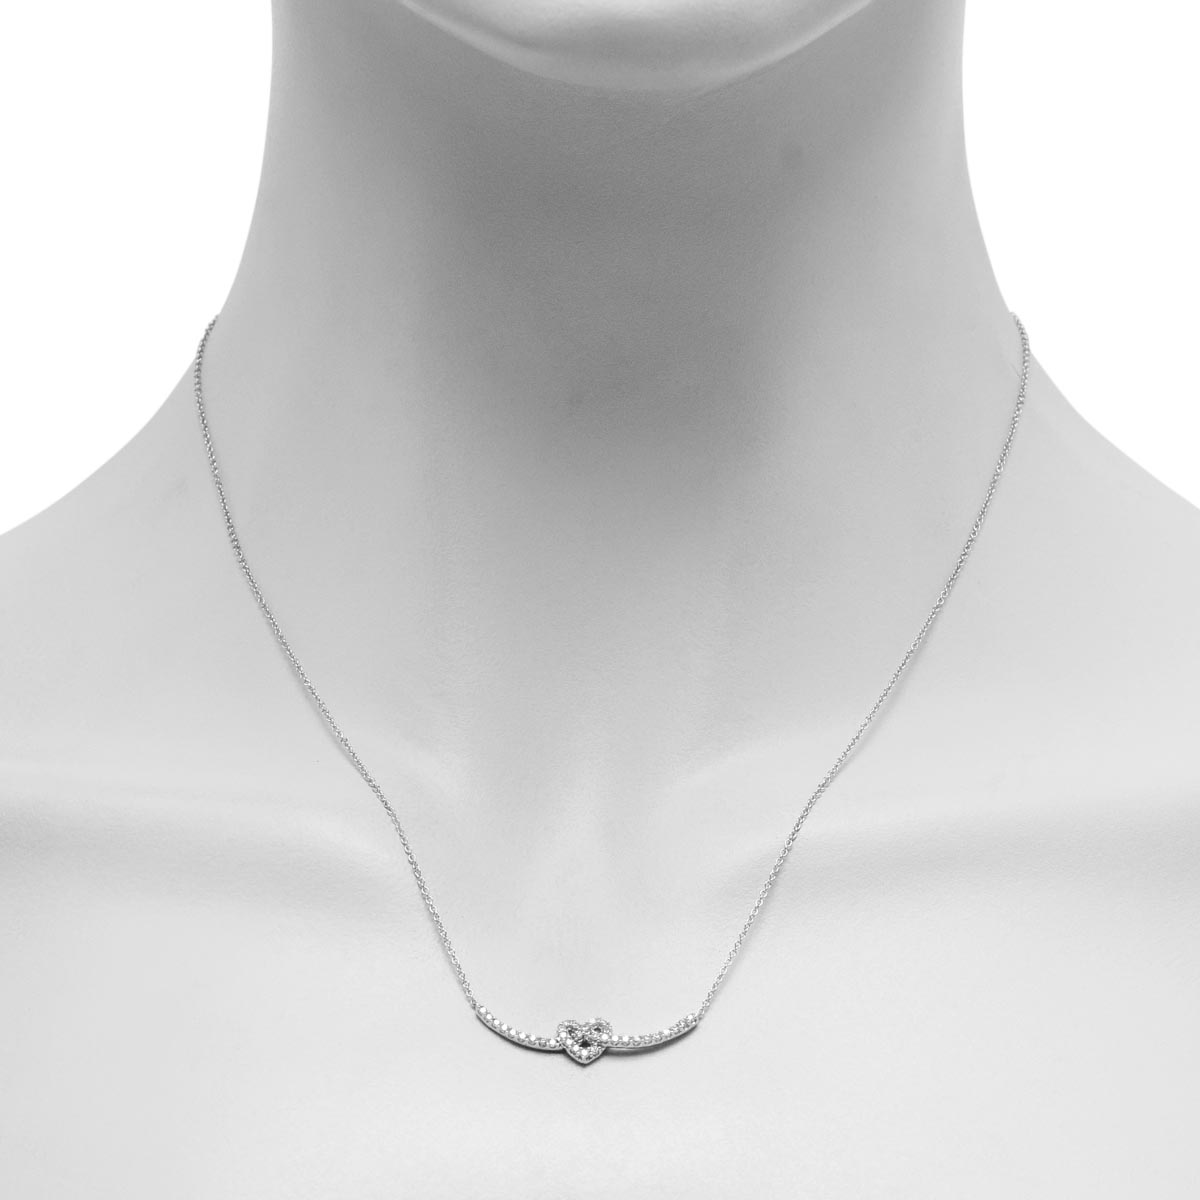 Tiffany Twisted Knot Pendant | Womens jewelry necklace, Twist knot, Pendant